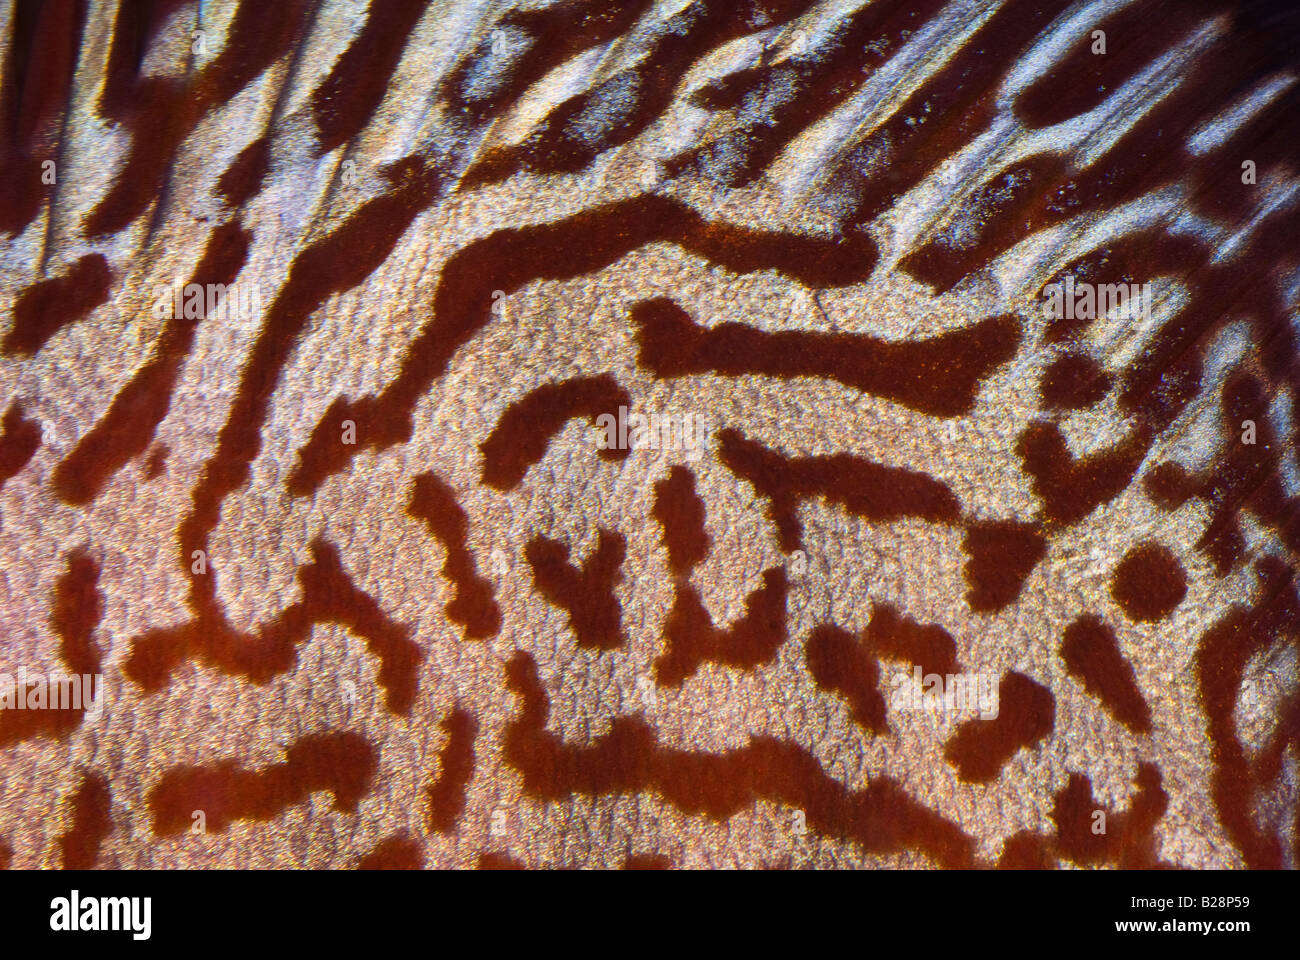 Symphysodon aequifasciata, discus skin, South America Cichlid Stock Photo